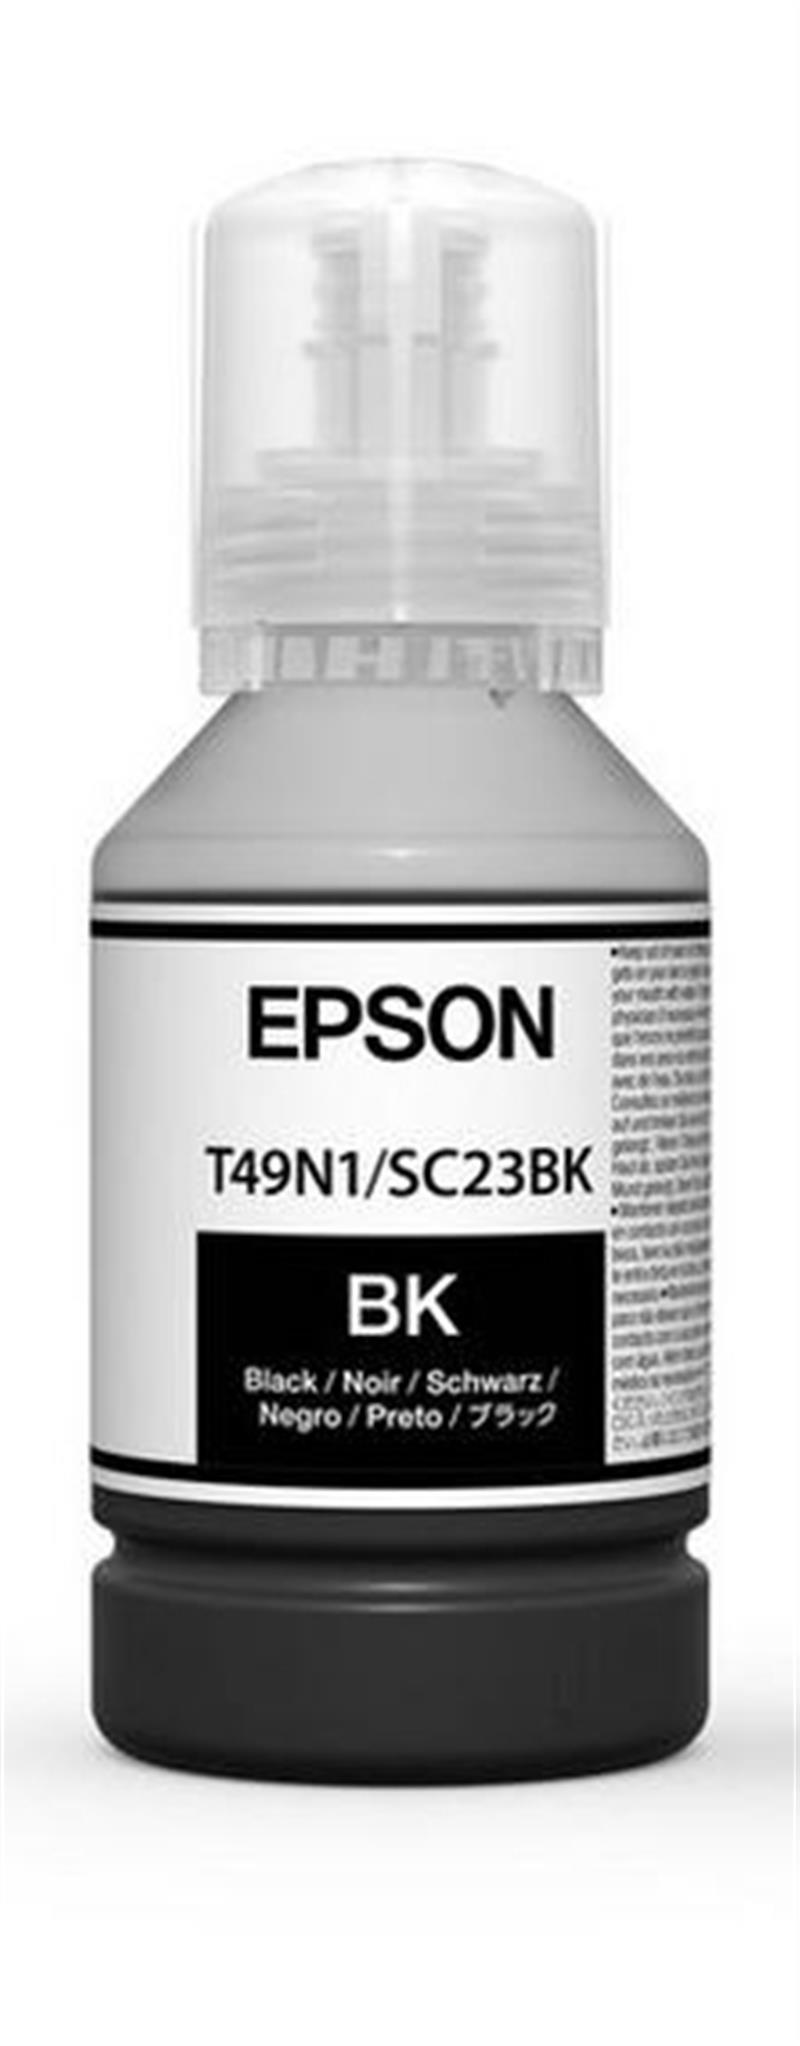 EPSON SC-T3100x Black Ink